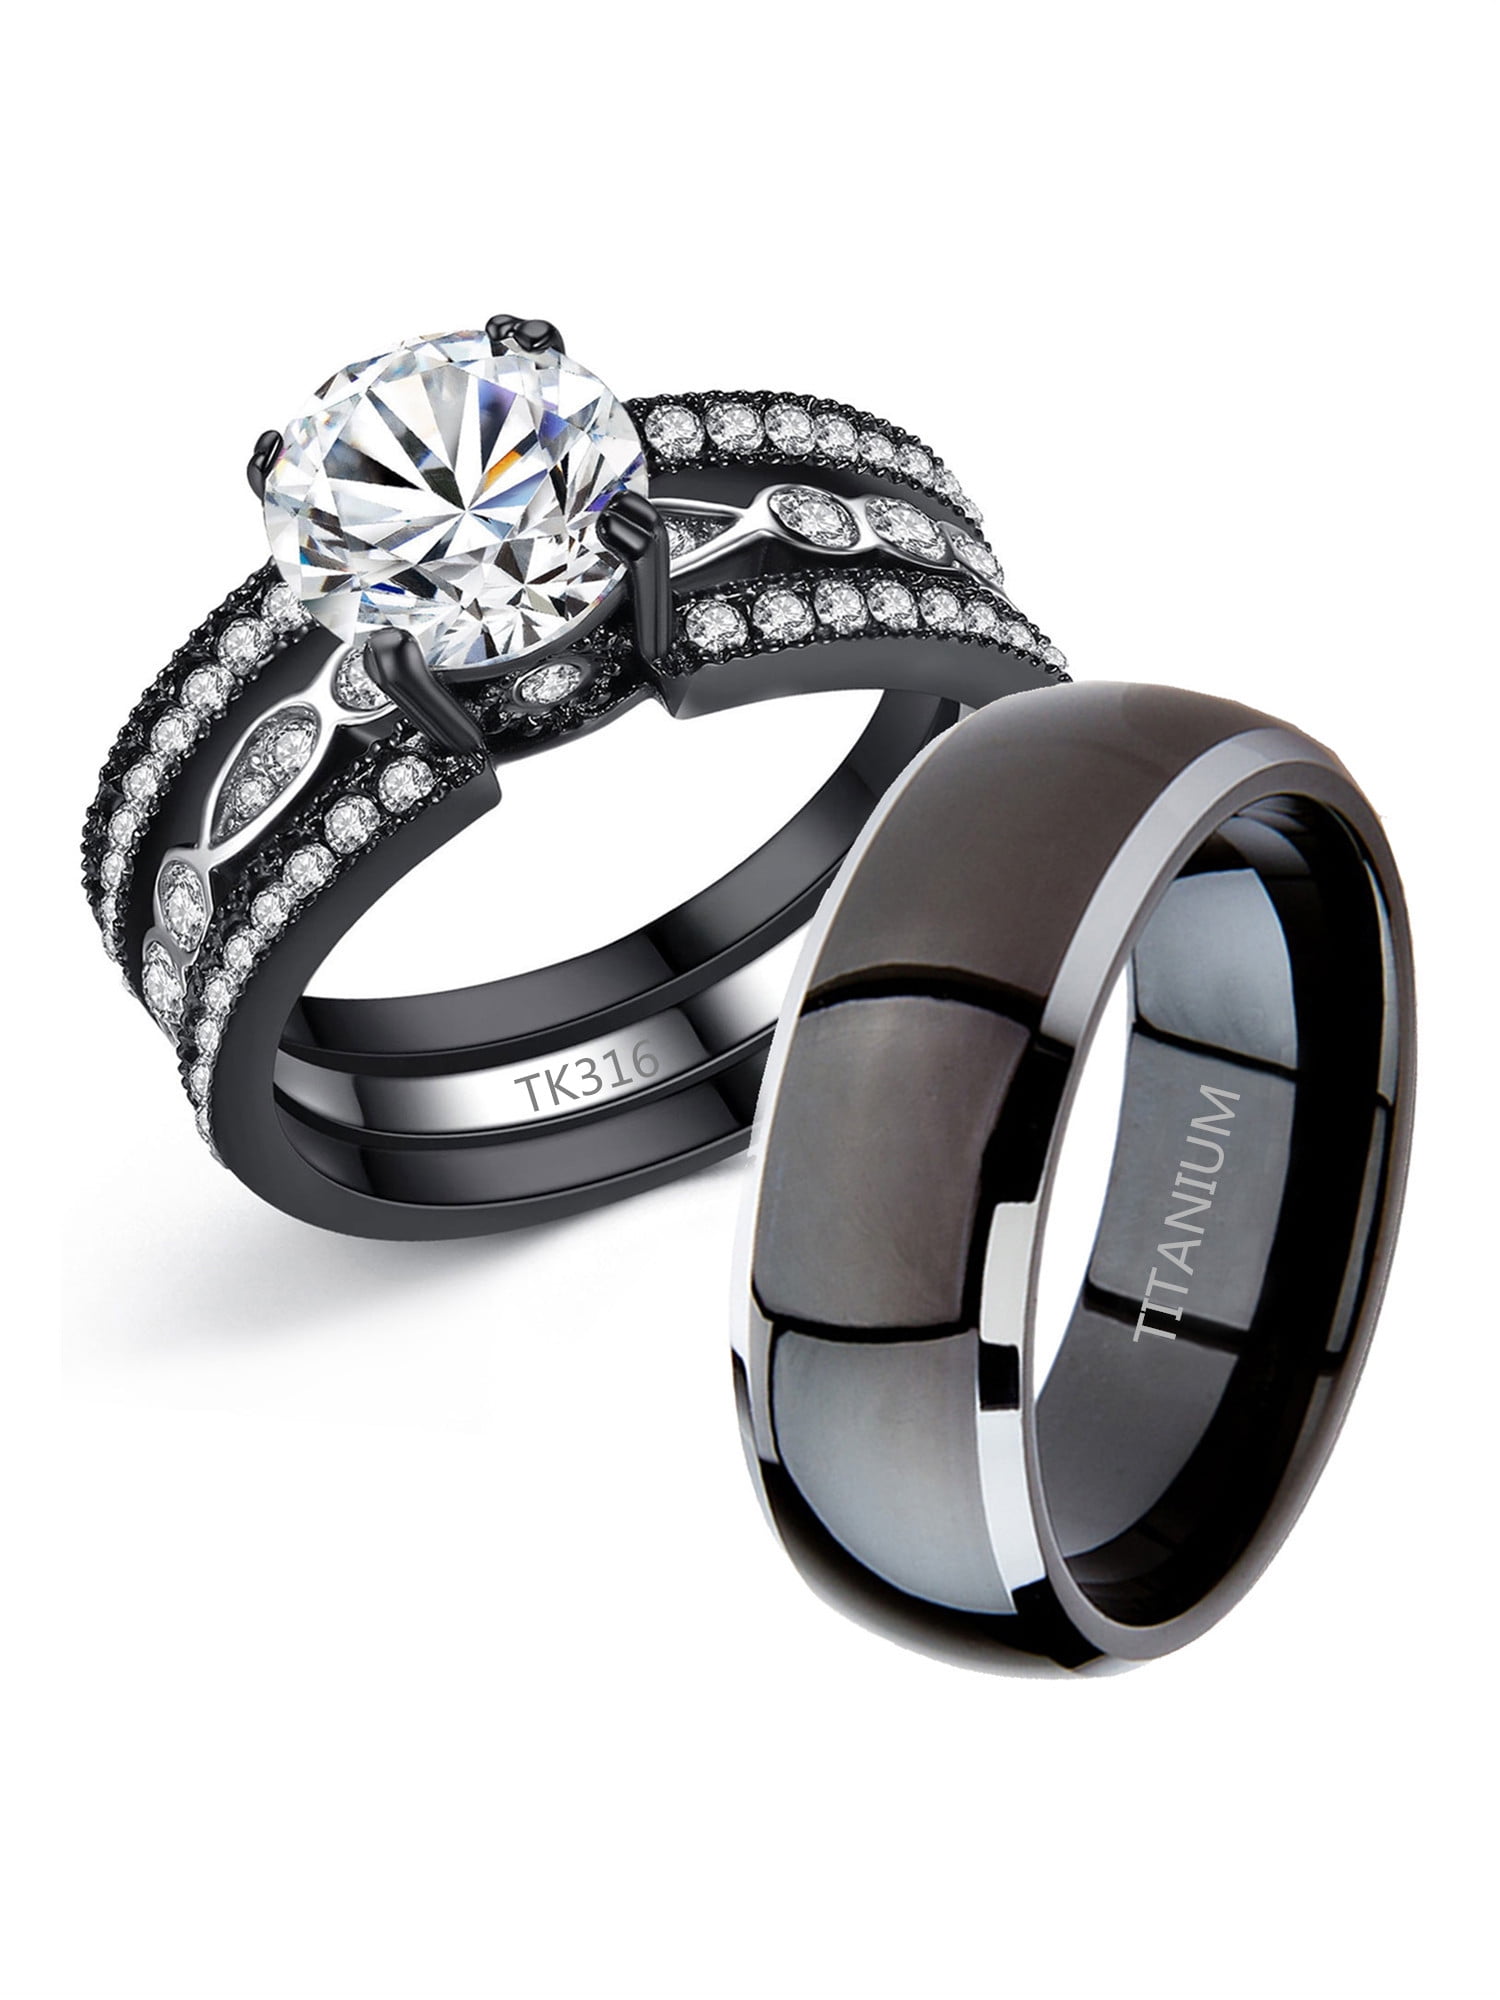 Couple Rings Titanium Steel Mens Wedding Bands CZ Women's Wedding Ring Sets 